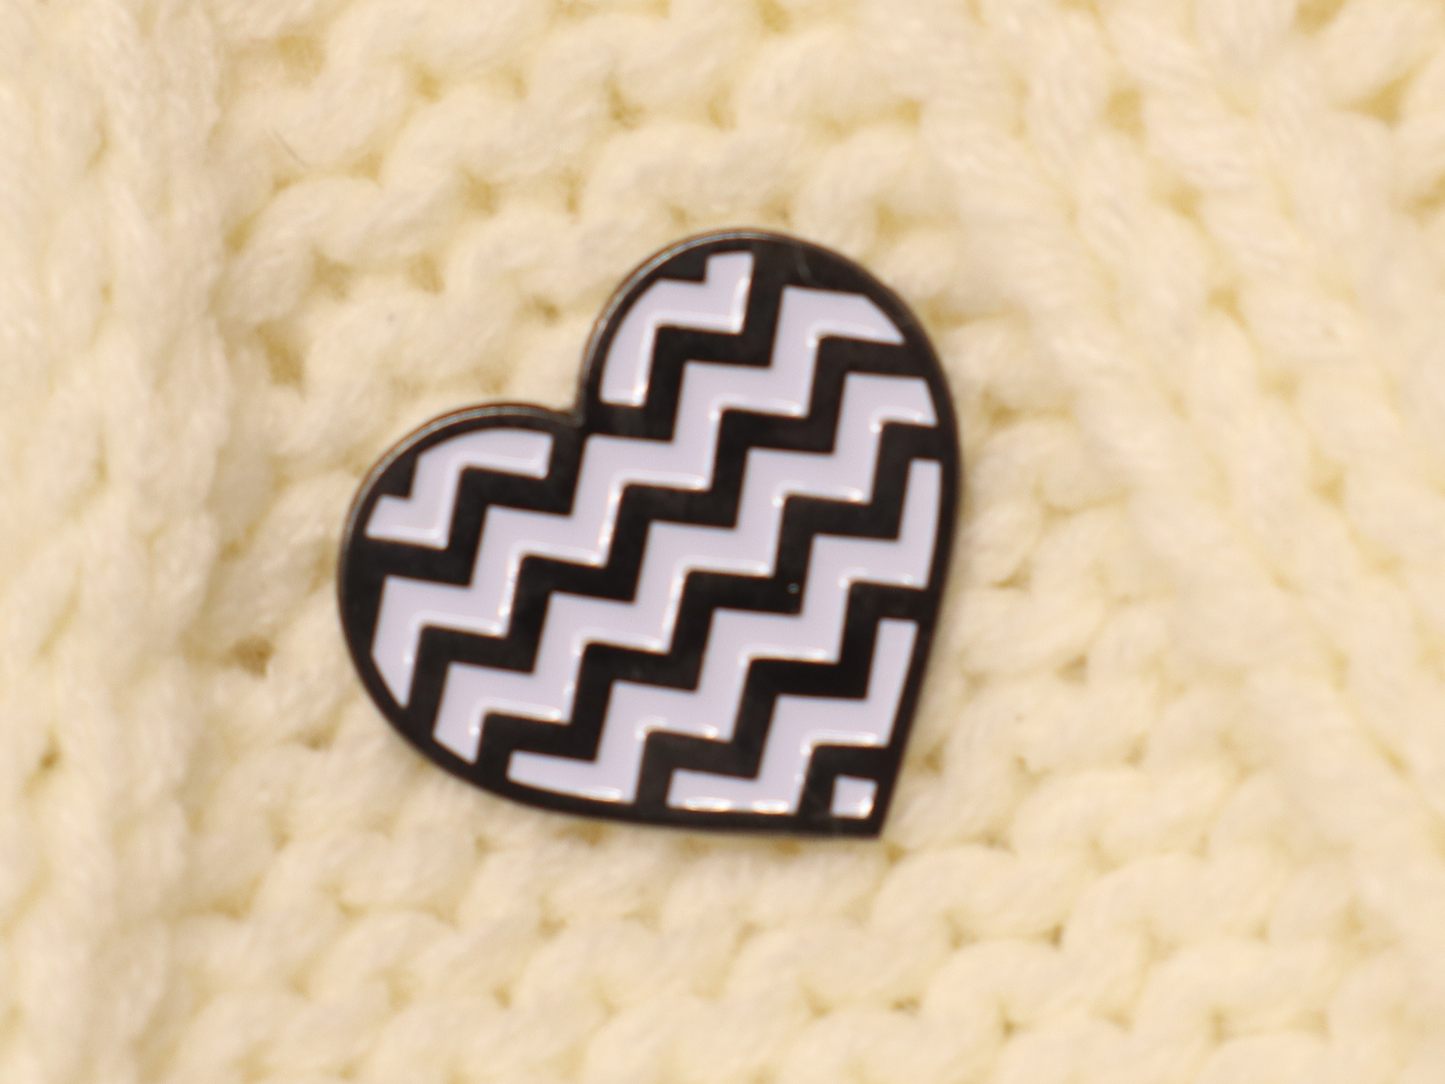 Chevron Heart Pin